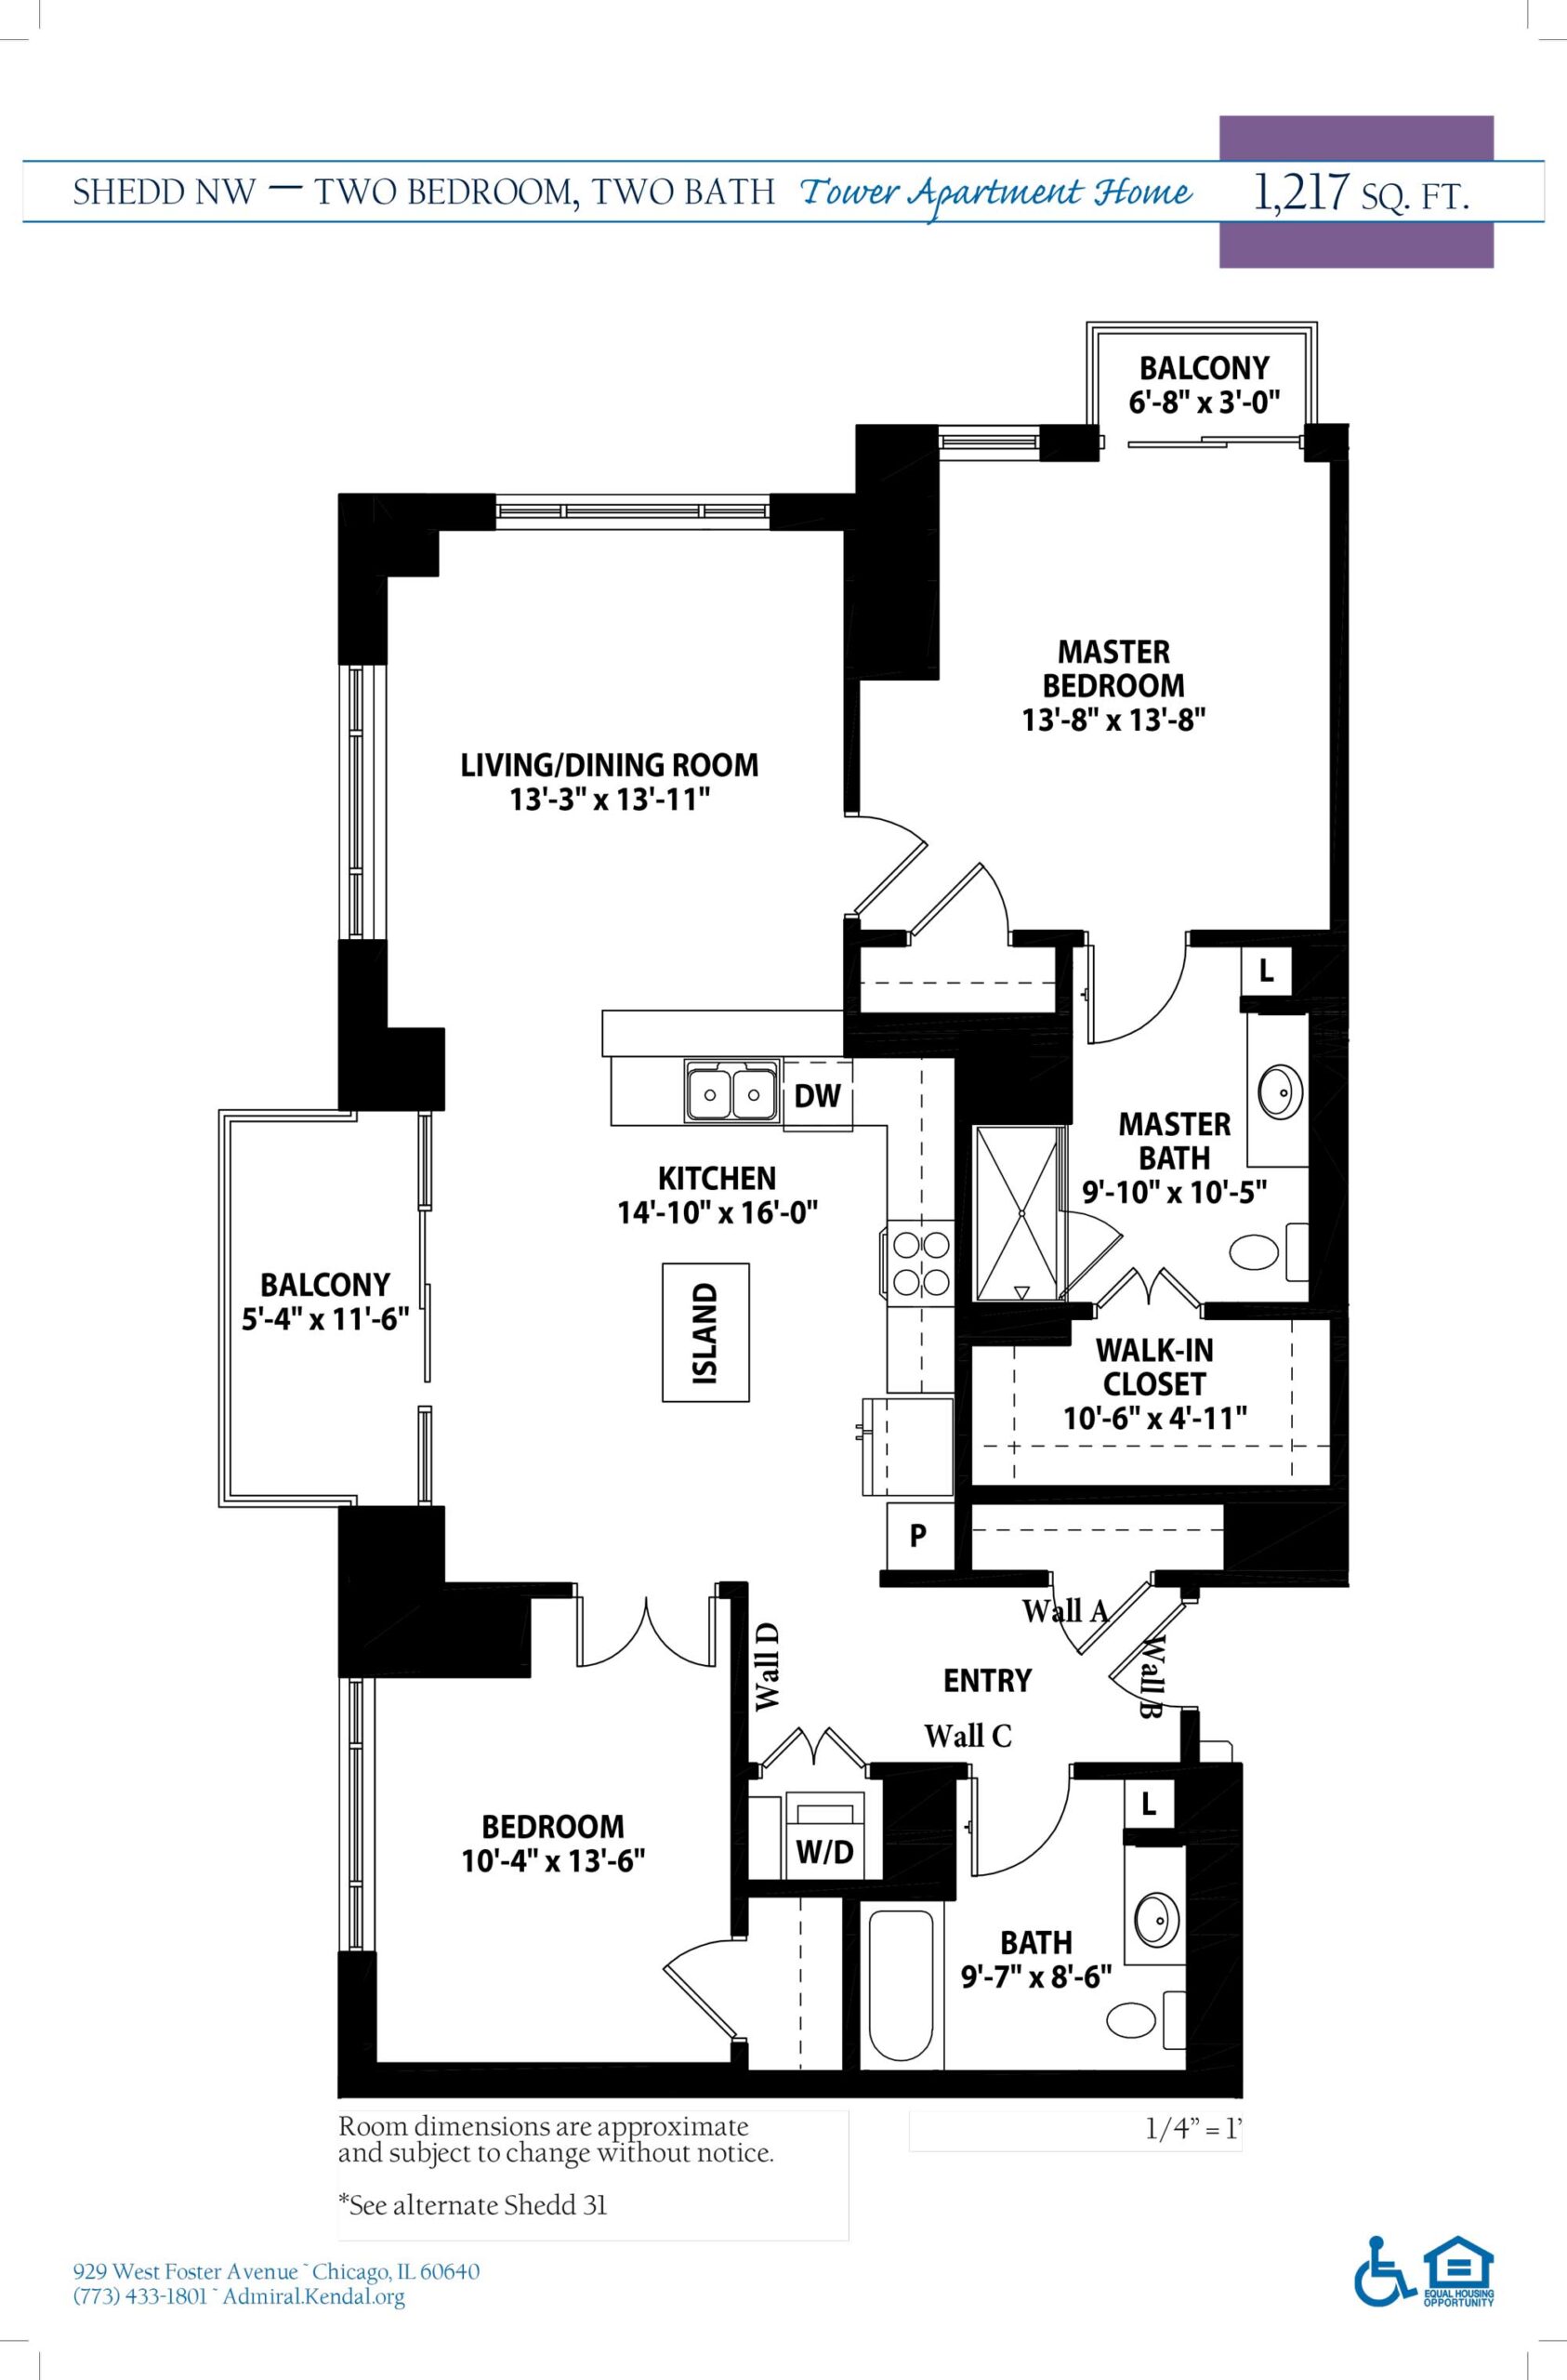 The Shedd apartment floor plan